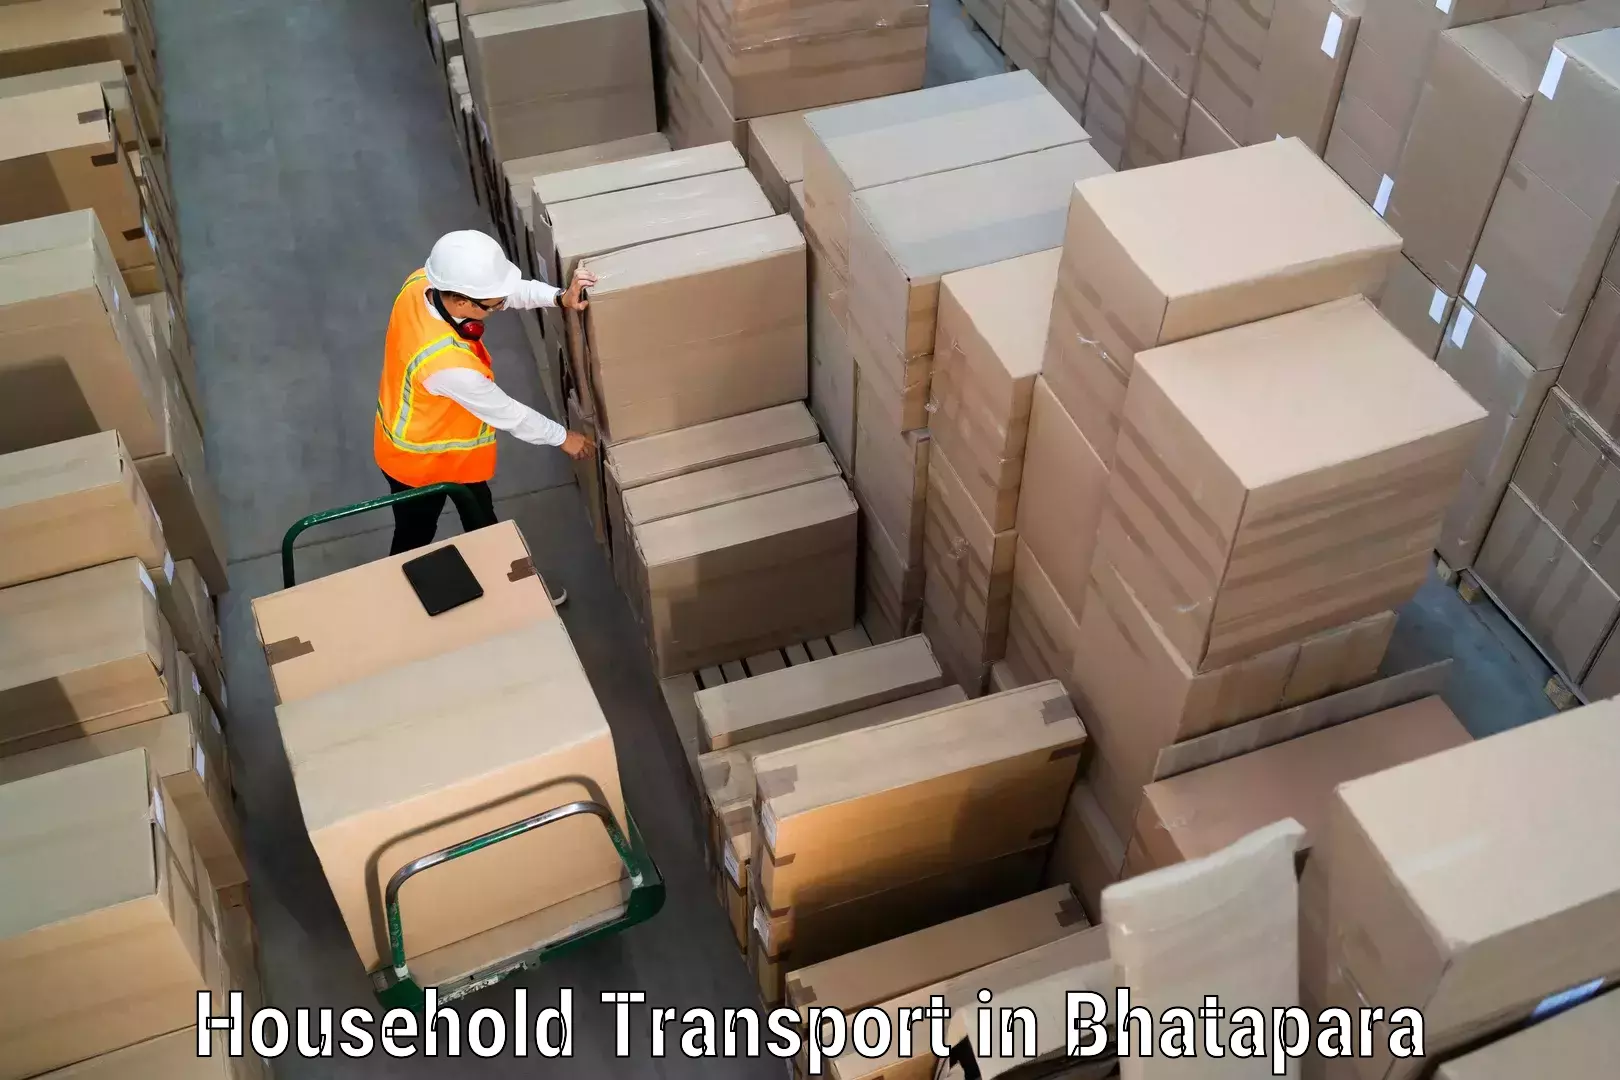 Household goods transport service in Bhatapara